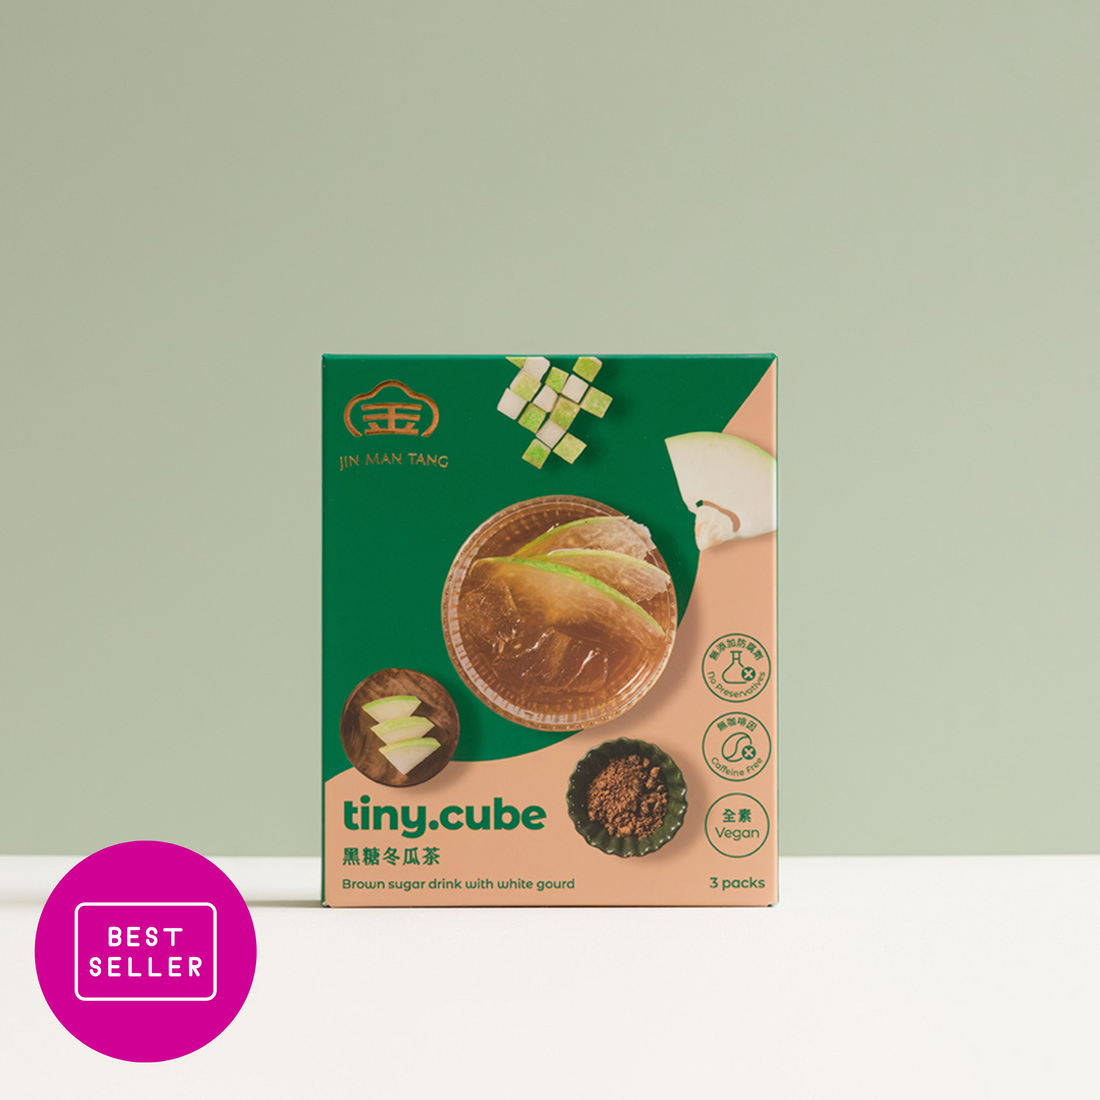 Jin Man Tang【Tiny.Cube】Brown Sugar Winter Melon Tea (23g x 3) / pack